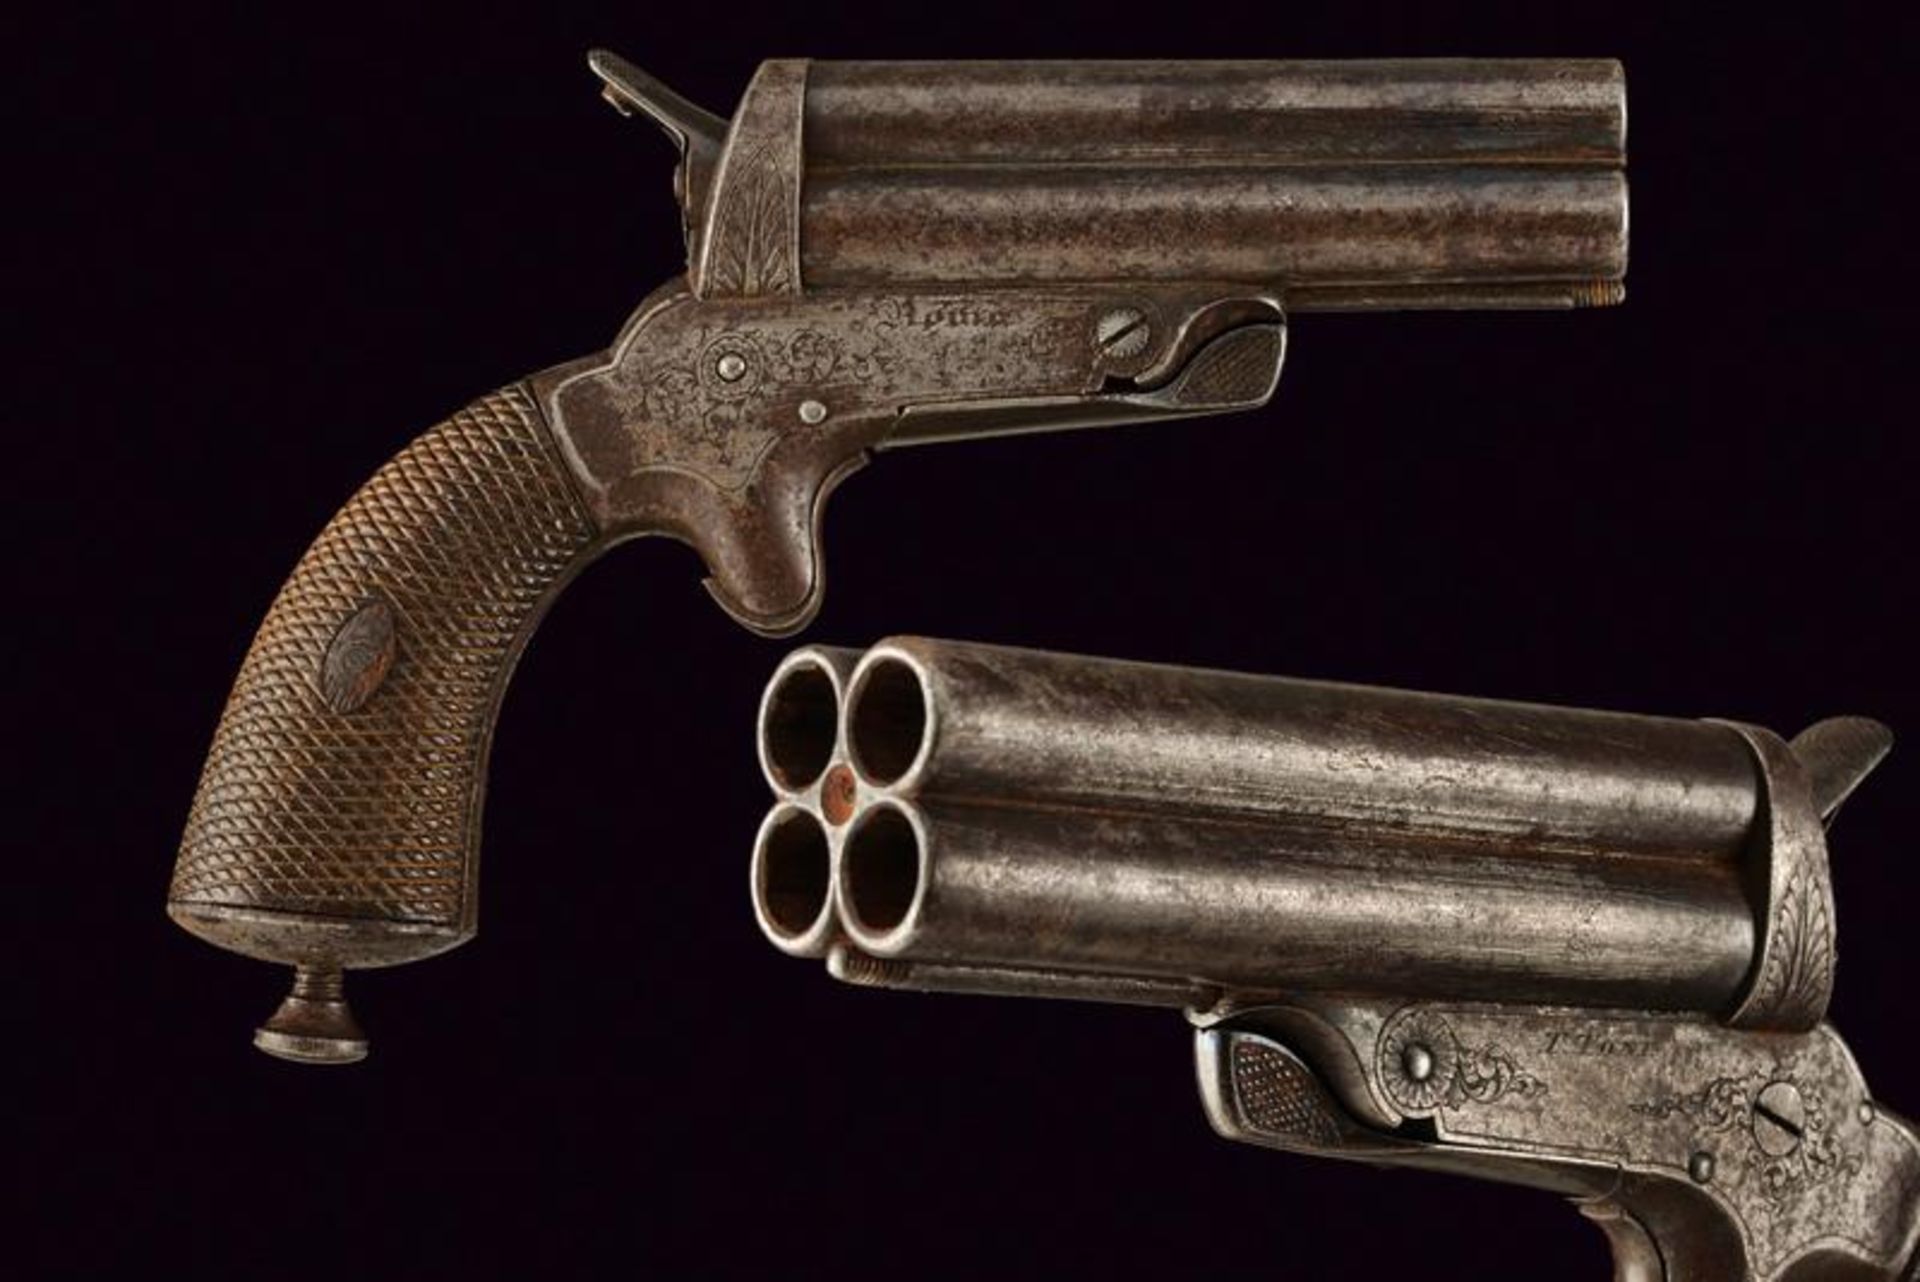 A rare Sharps type four barrelled rim-fire pistol by Toni